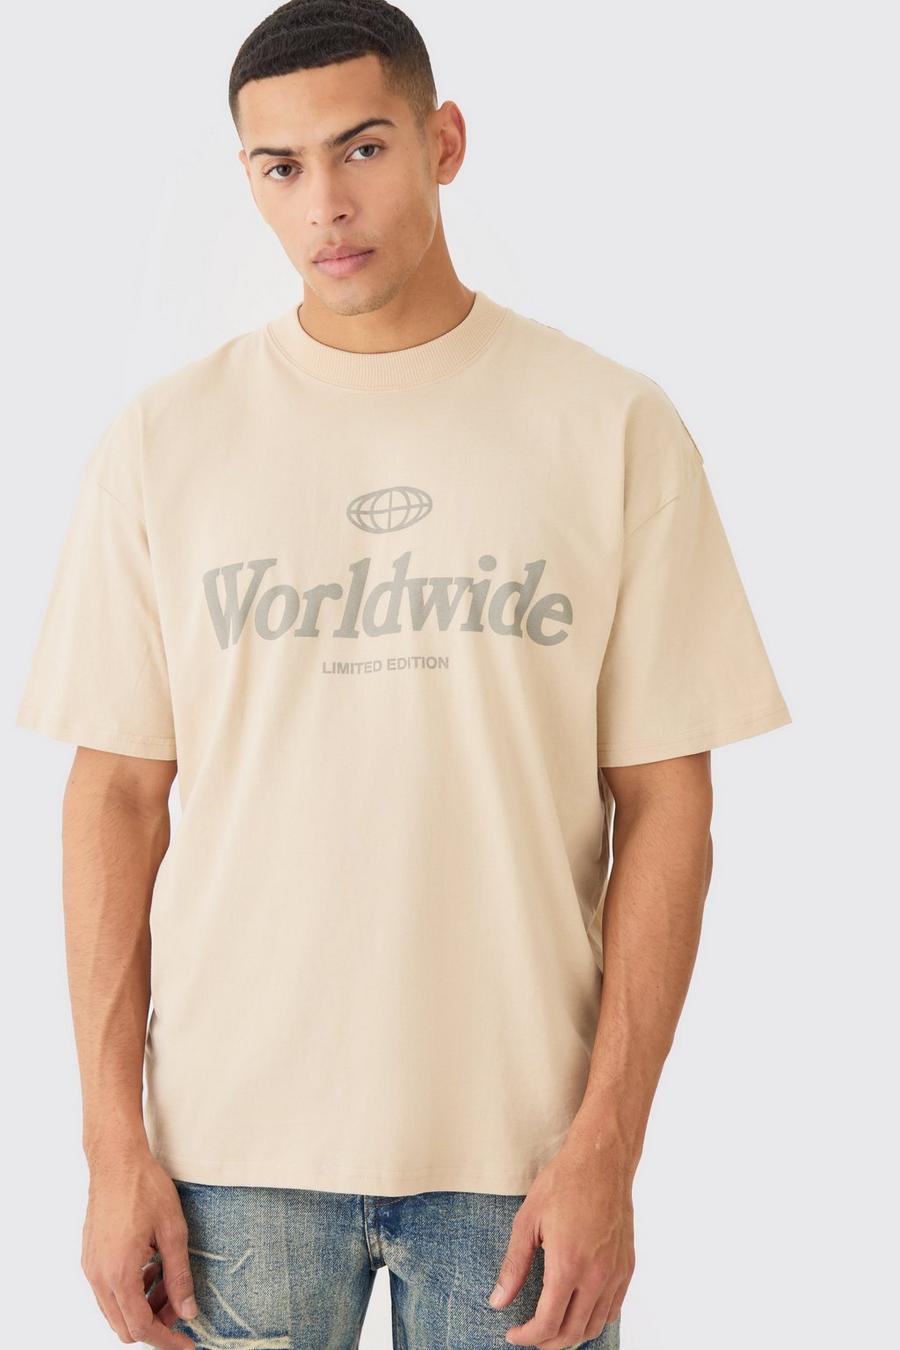 Sand Worldwide Oversize t-shirt